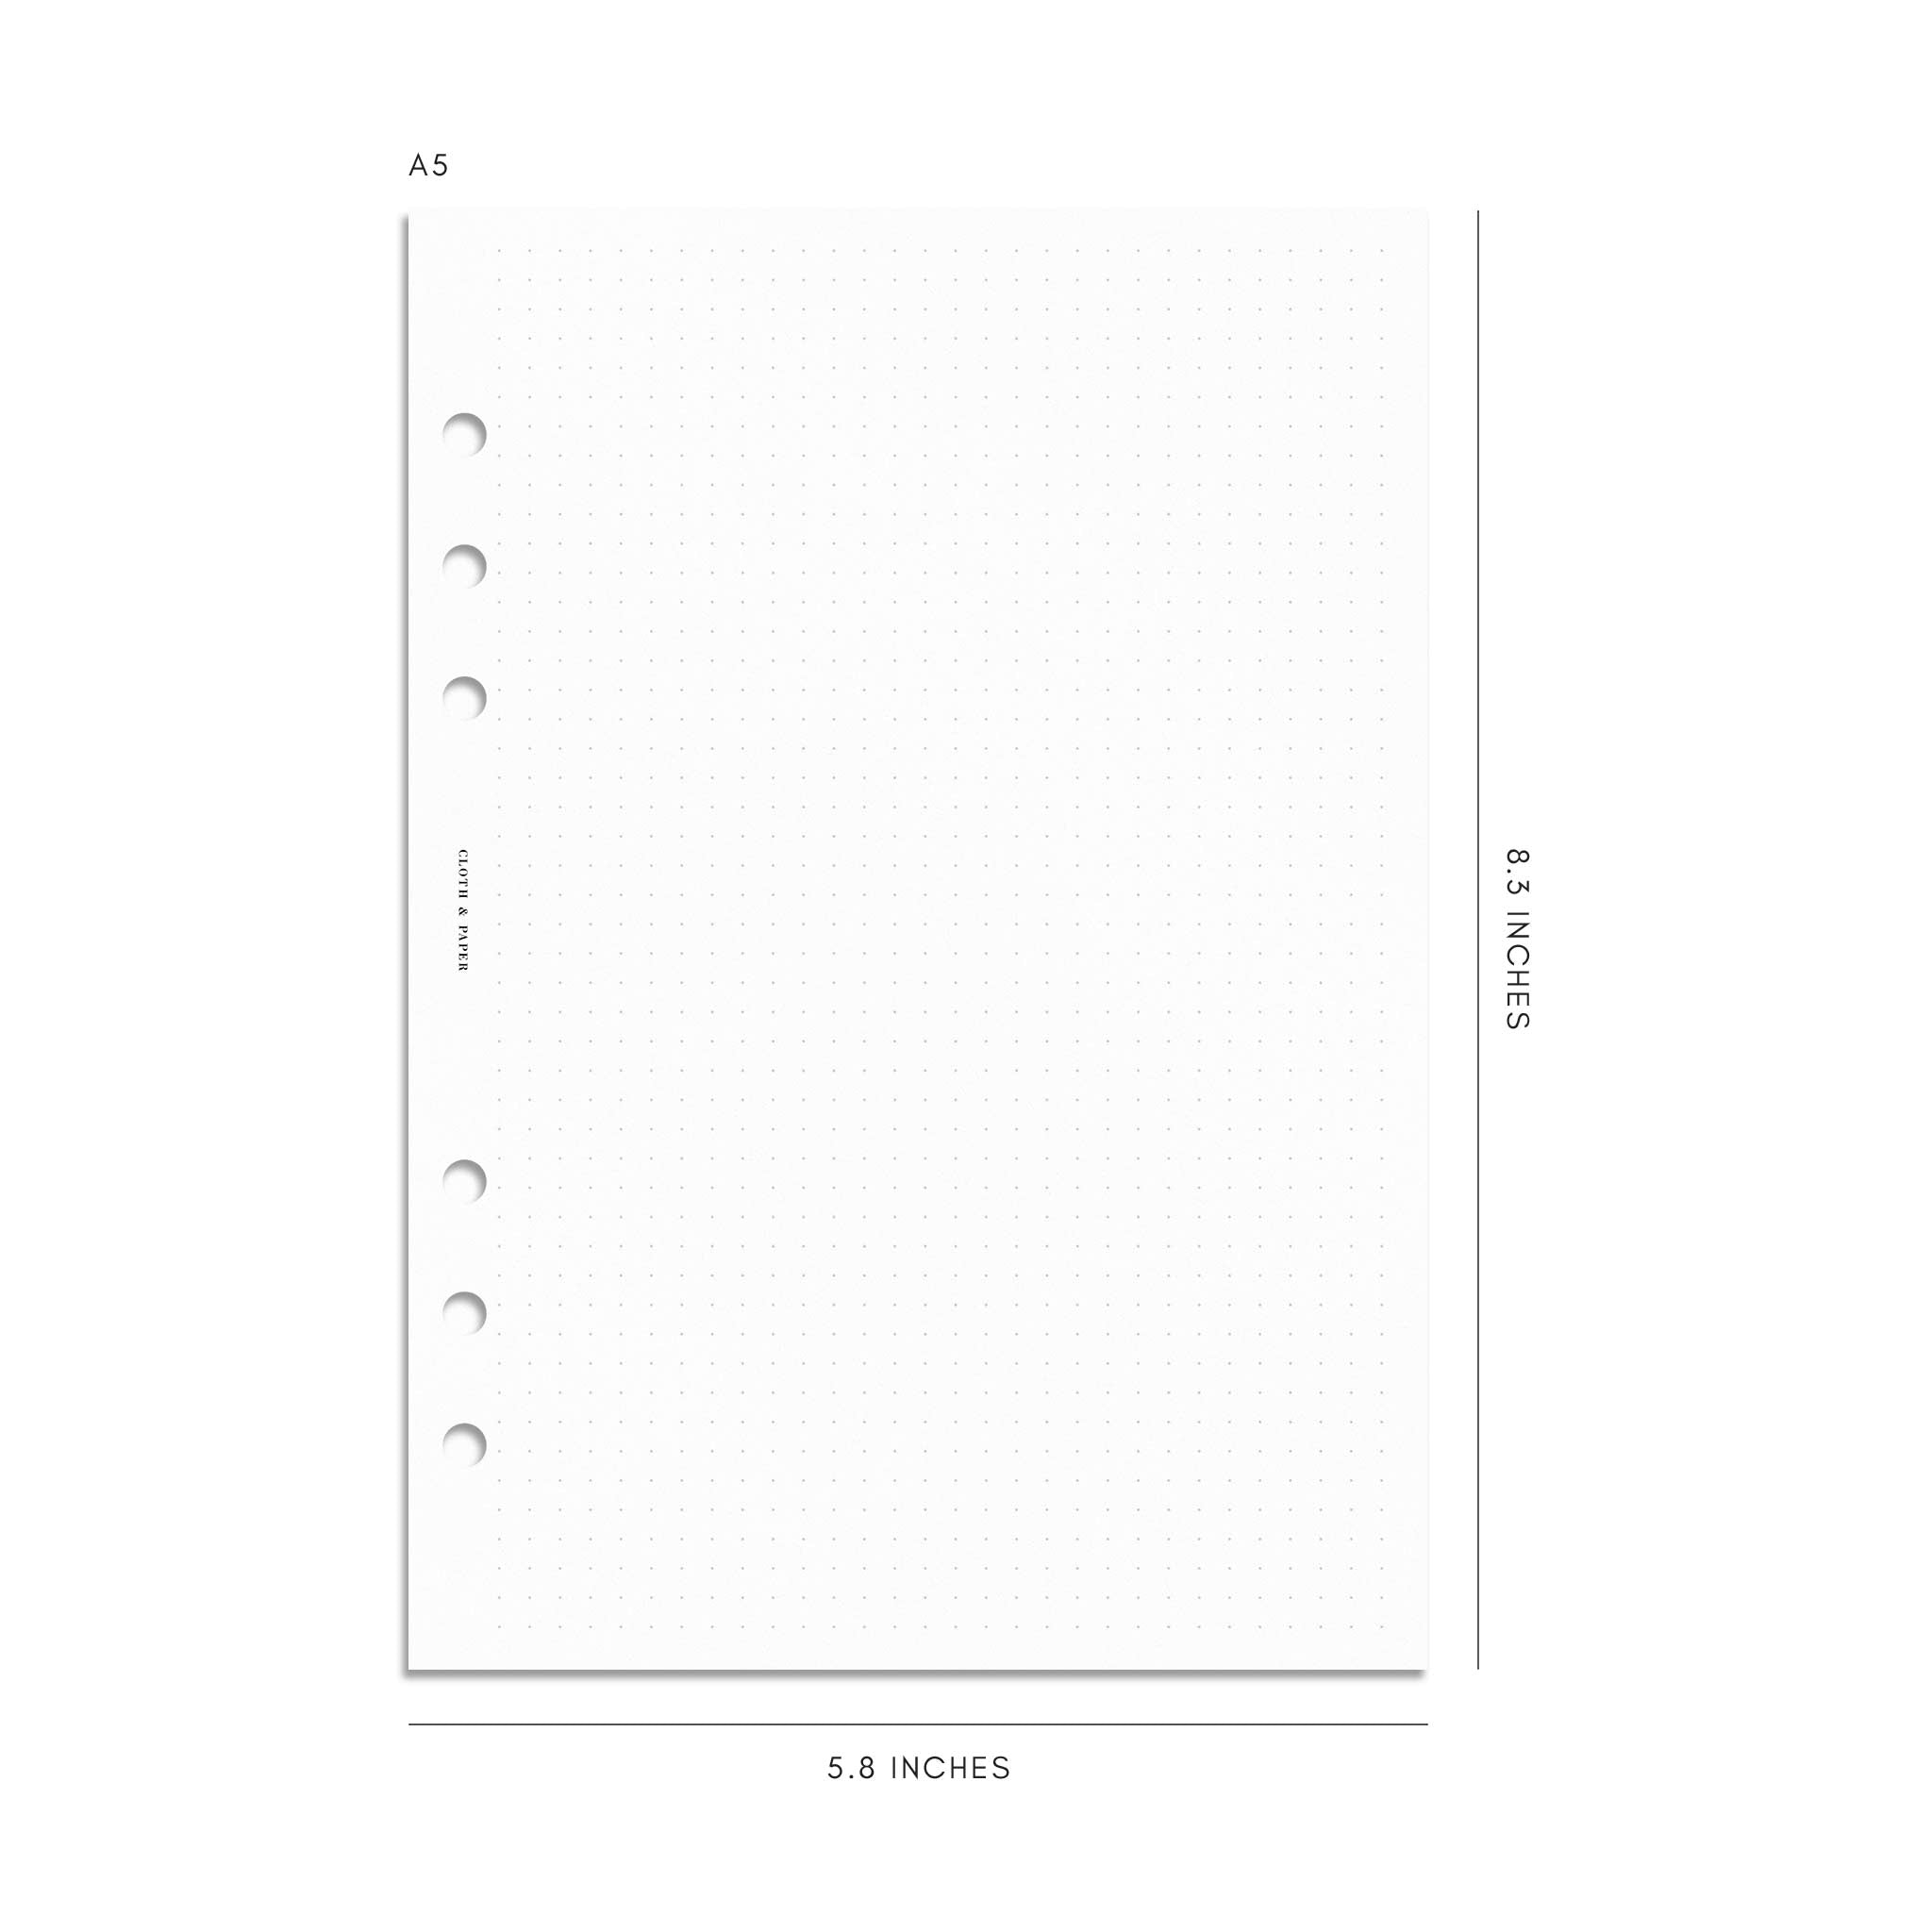 Mark's System Planner Binder Refill - A5 - Dot Grid - Brown